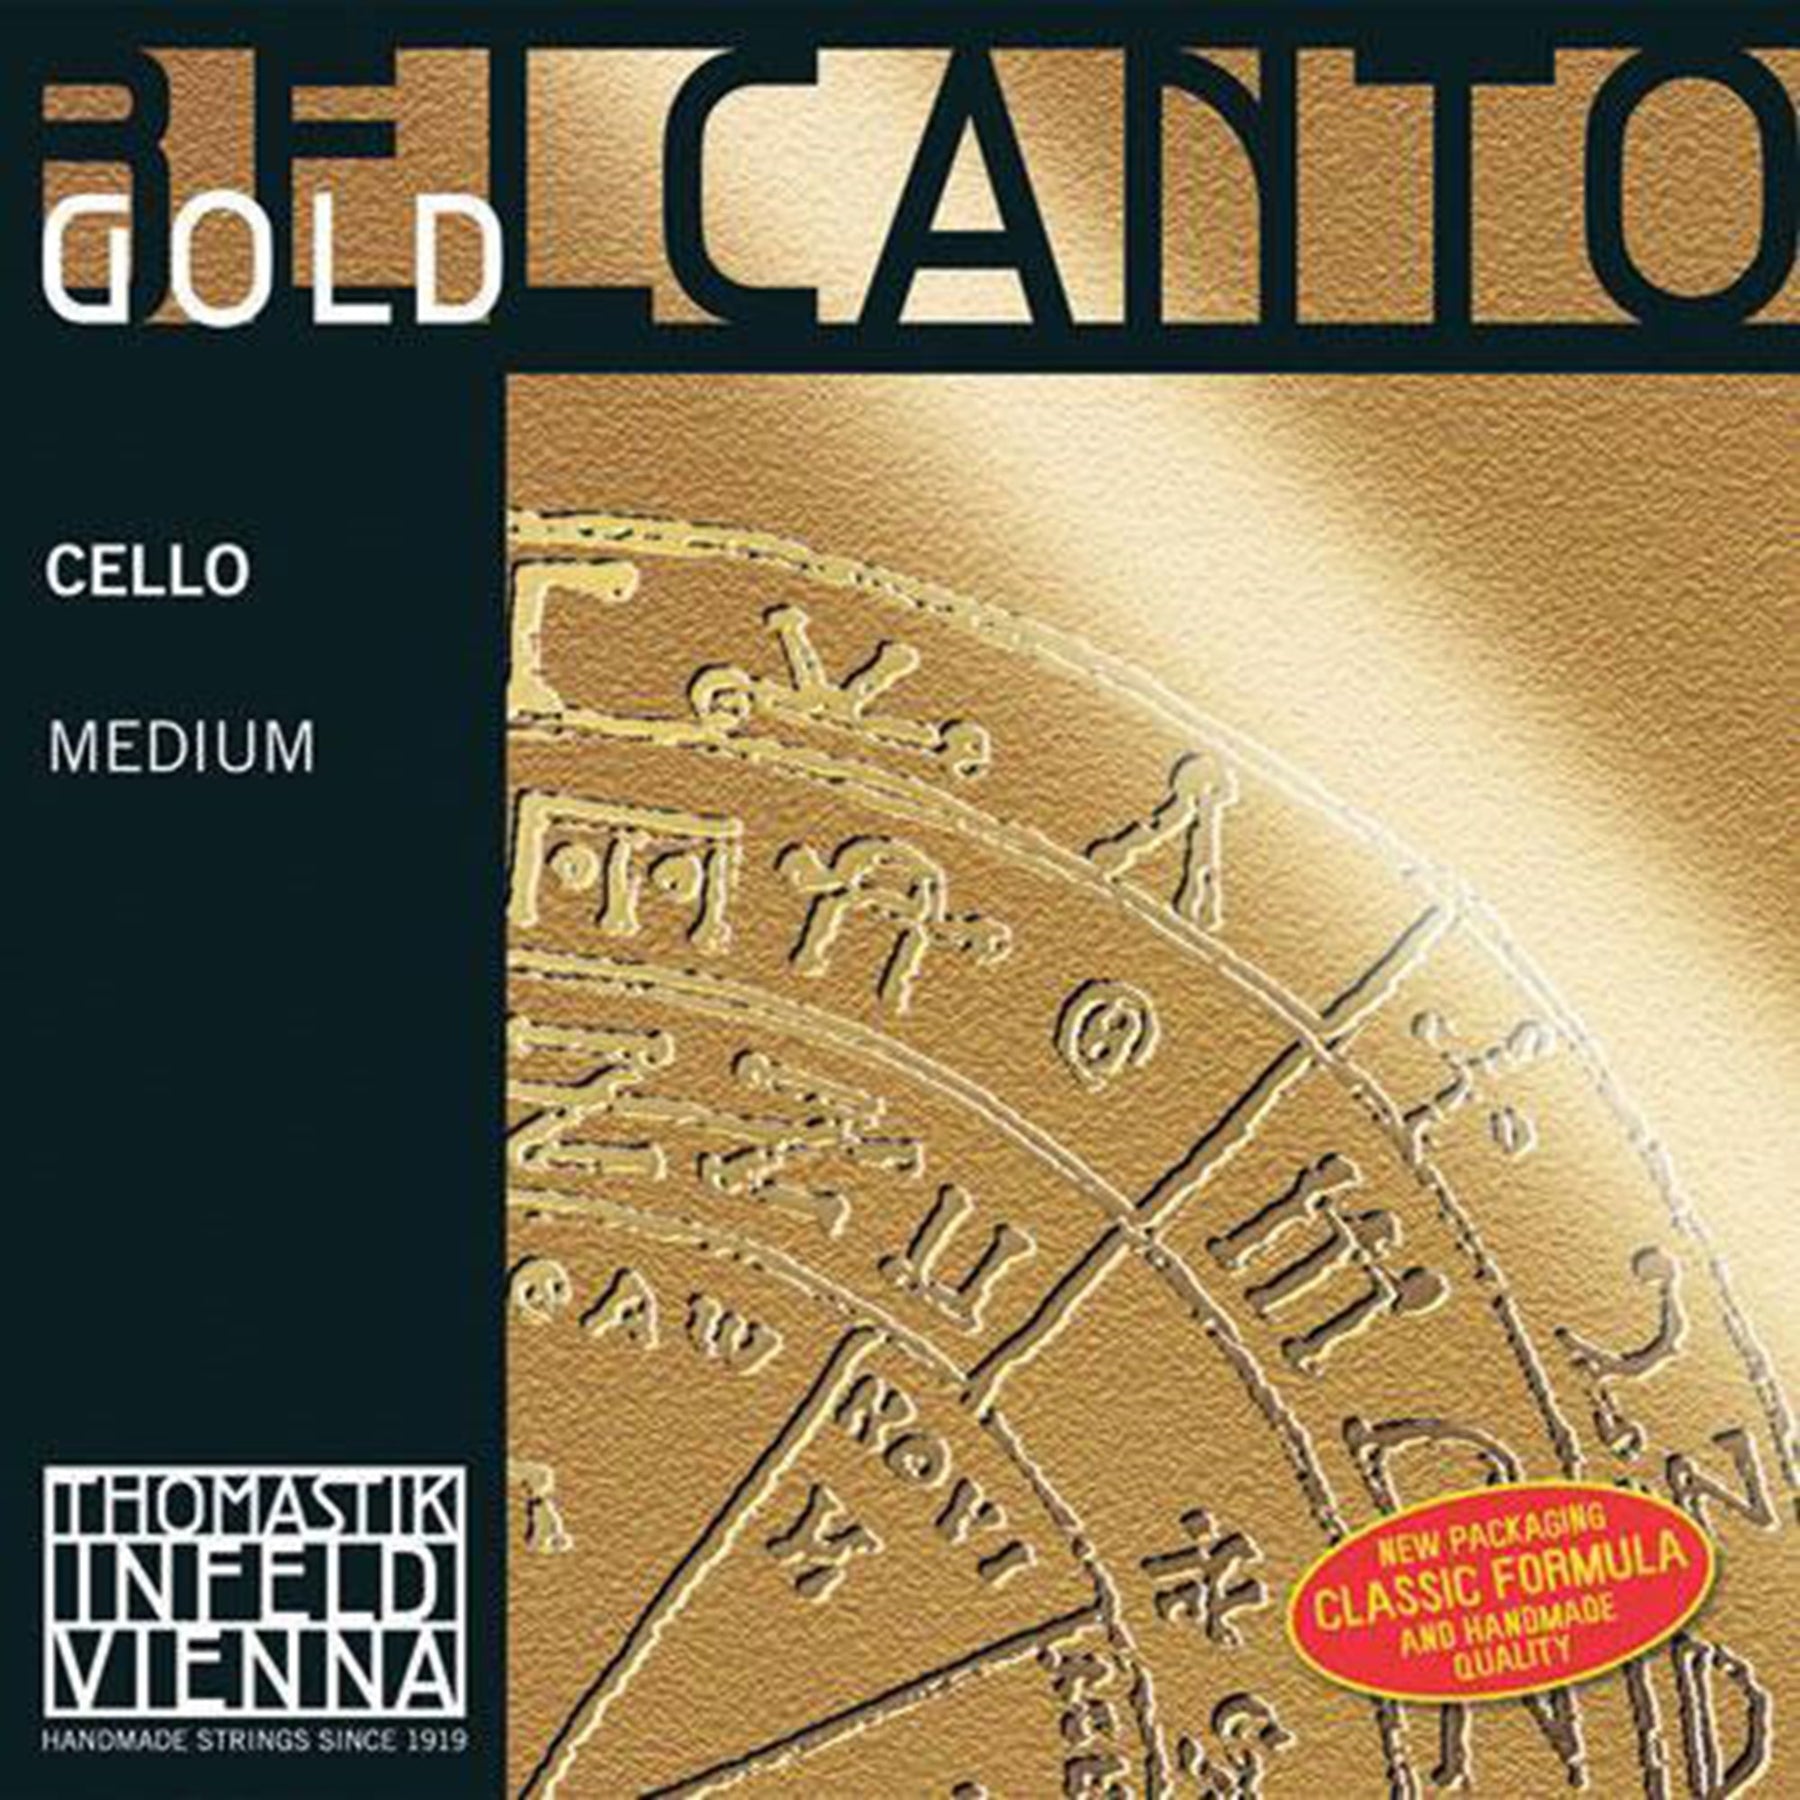 Thomastik Belcanto Gold Cello C String